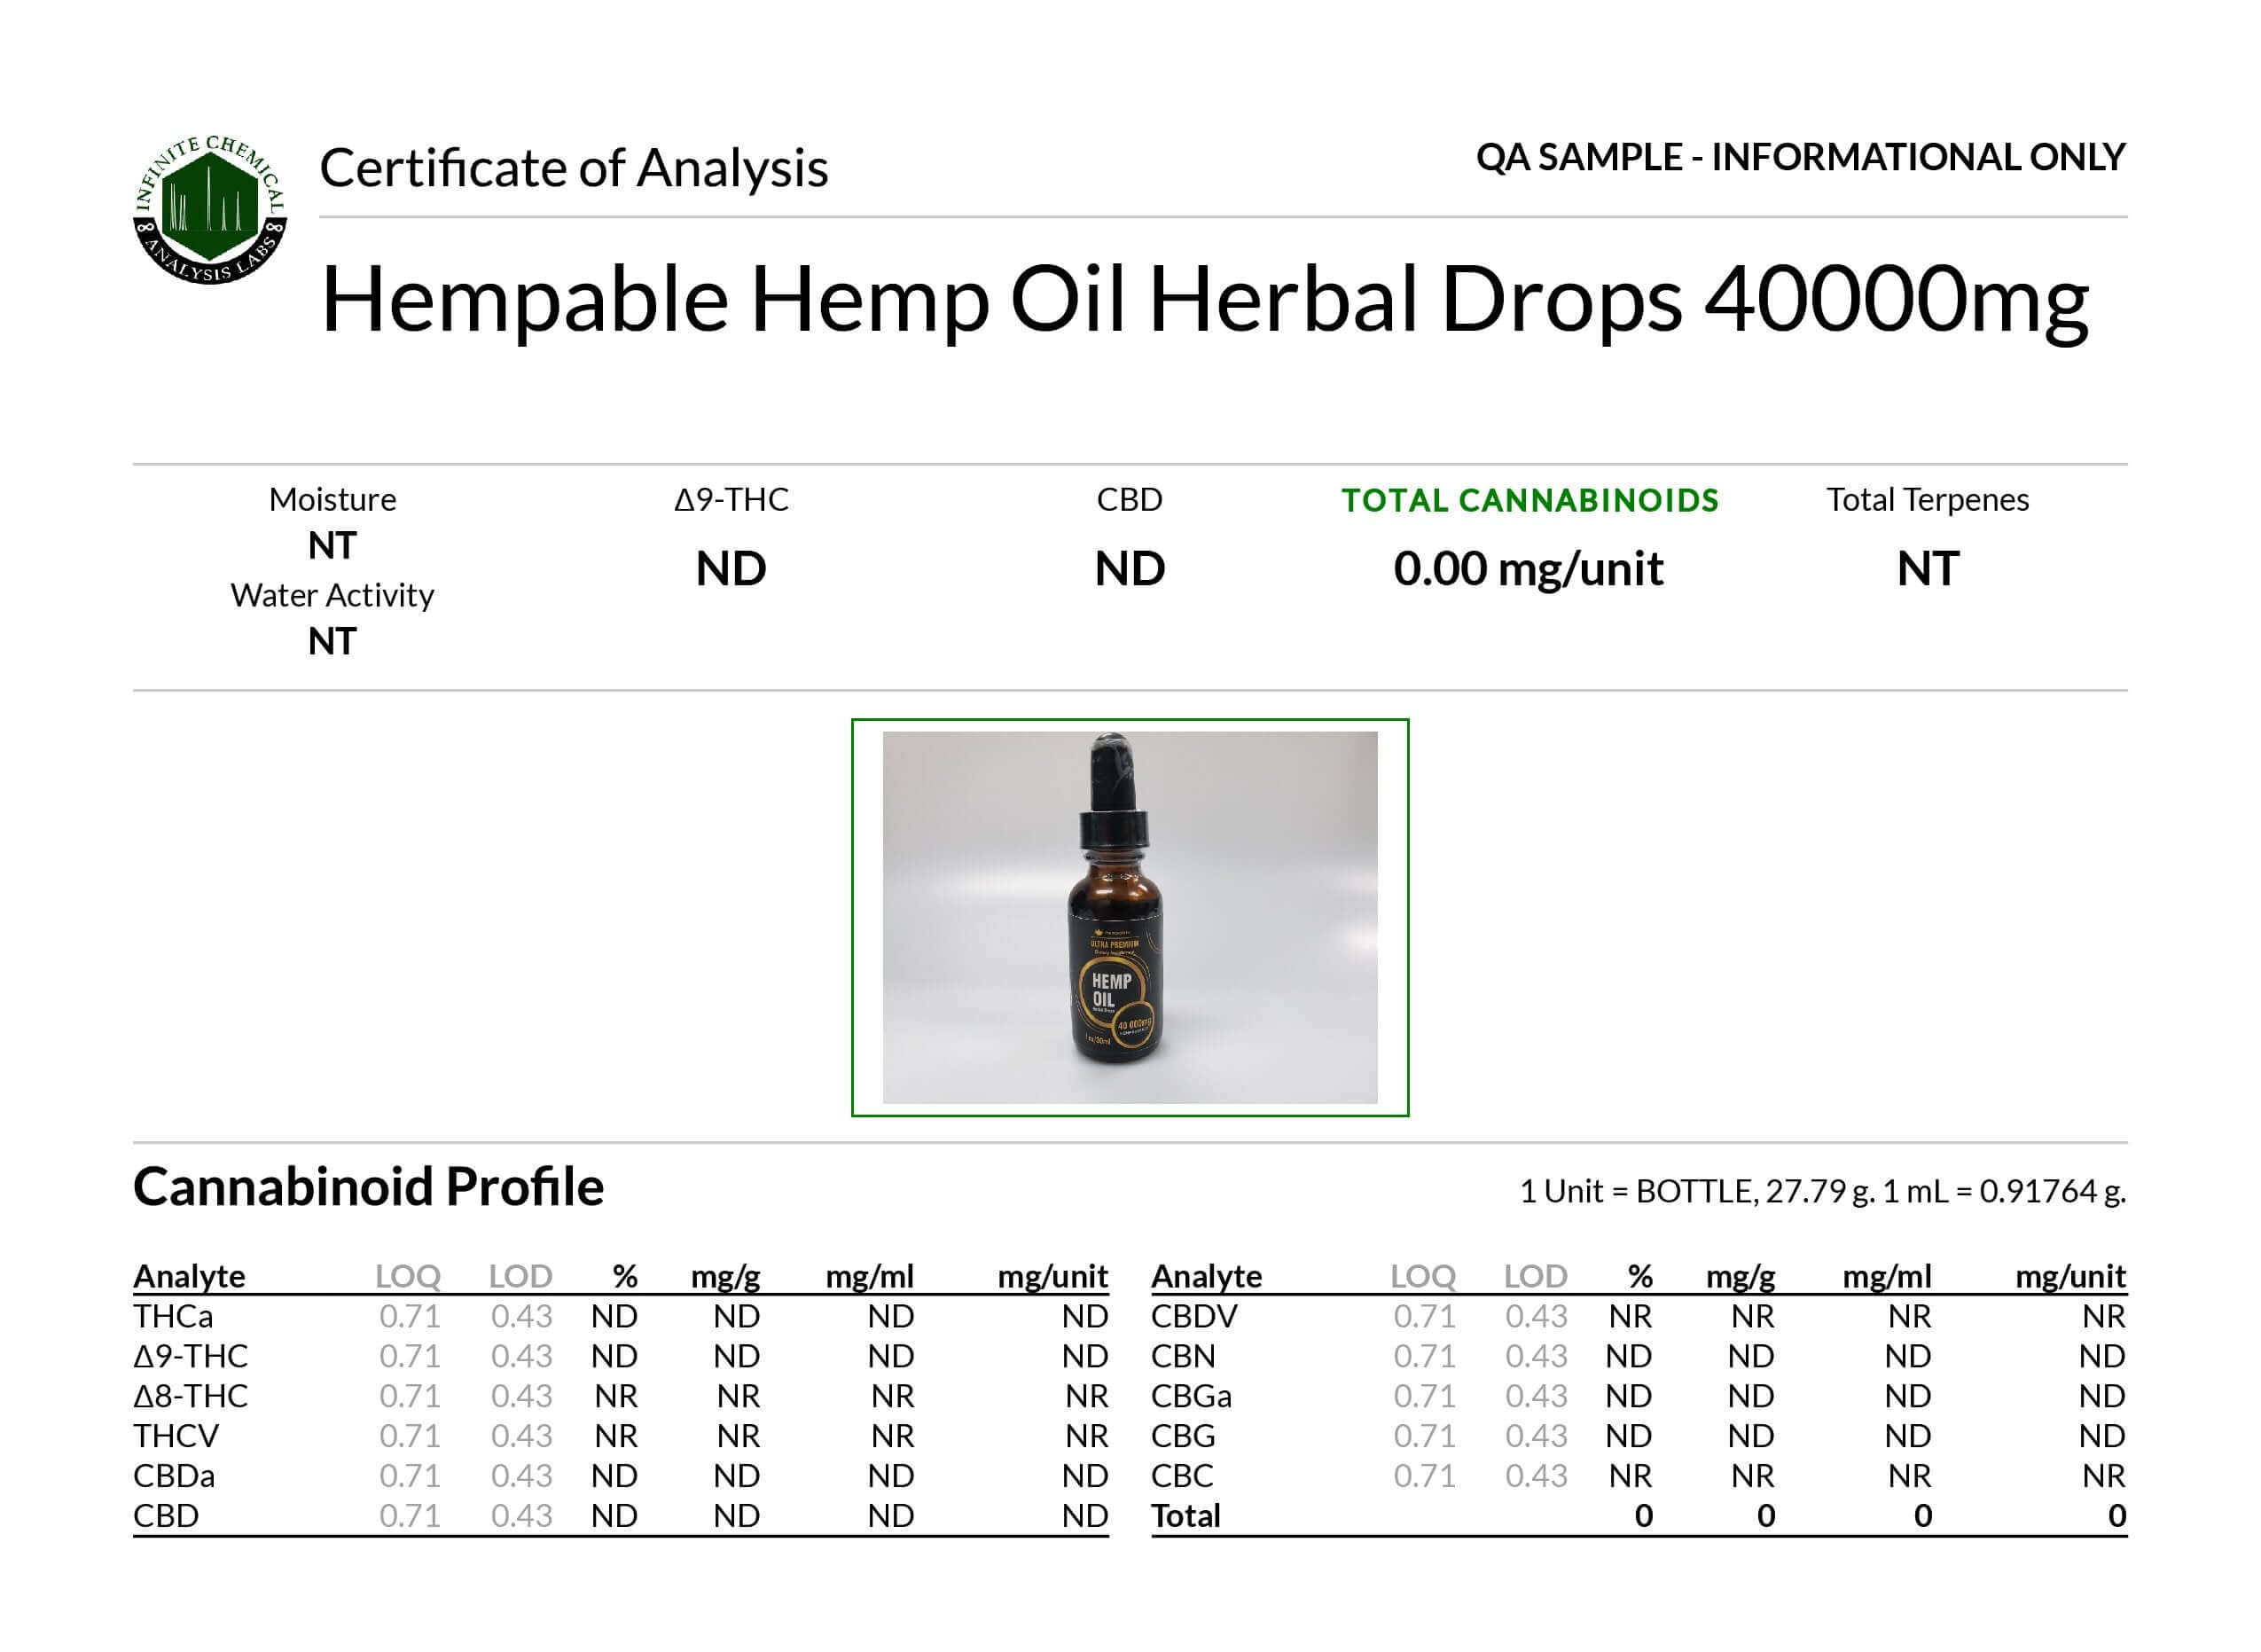 Lab results for Hempable Hemp Oil Herbal Drops 40000mg